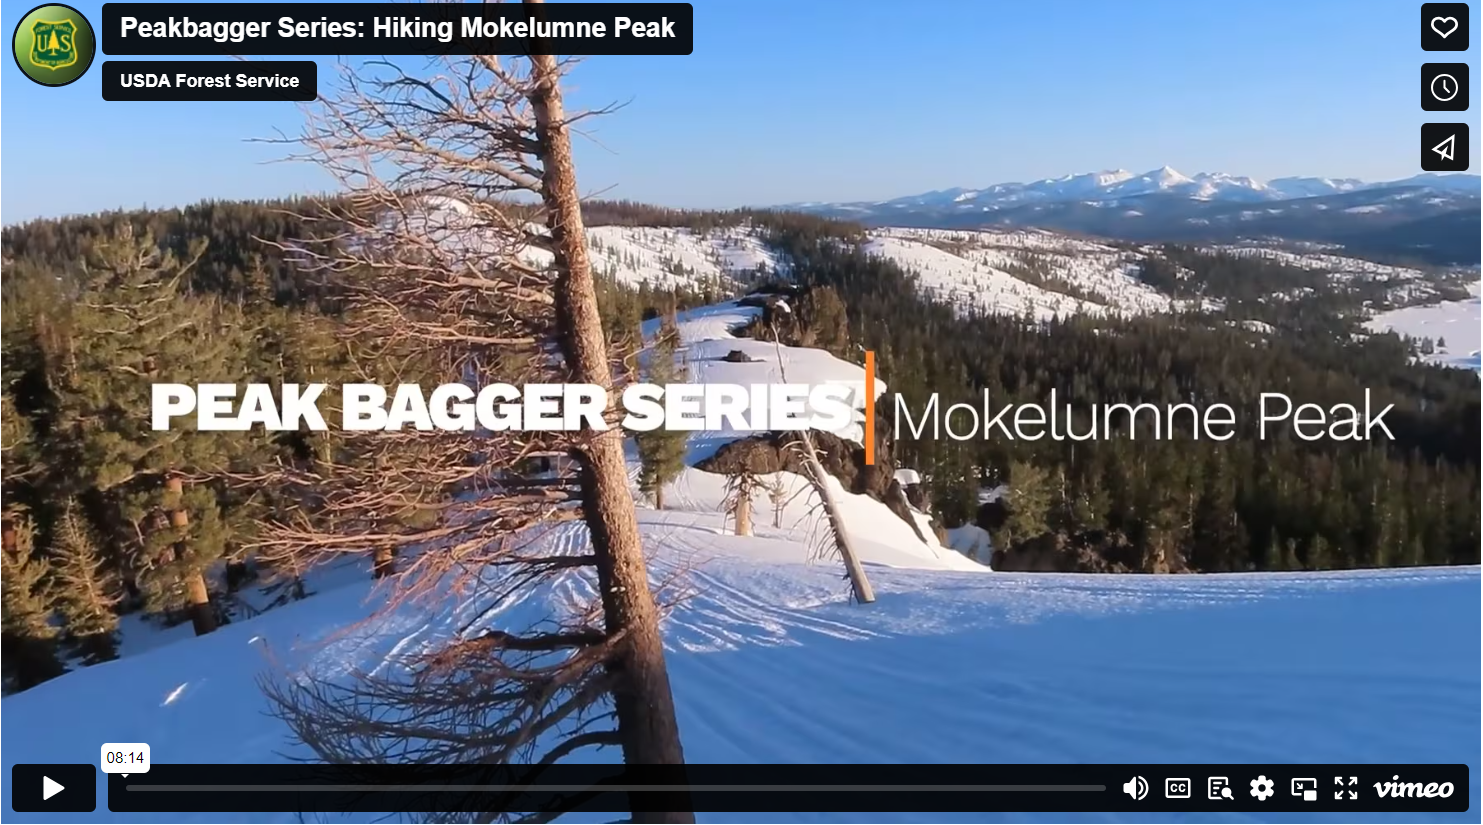 Video player for Forest News Episode 27 on the topic Peakbagger Series: Hiking Mokelumne Peak